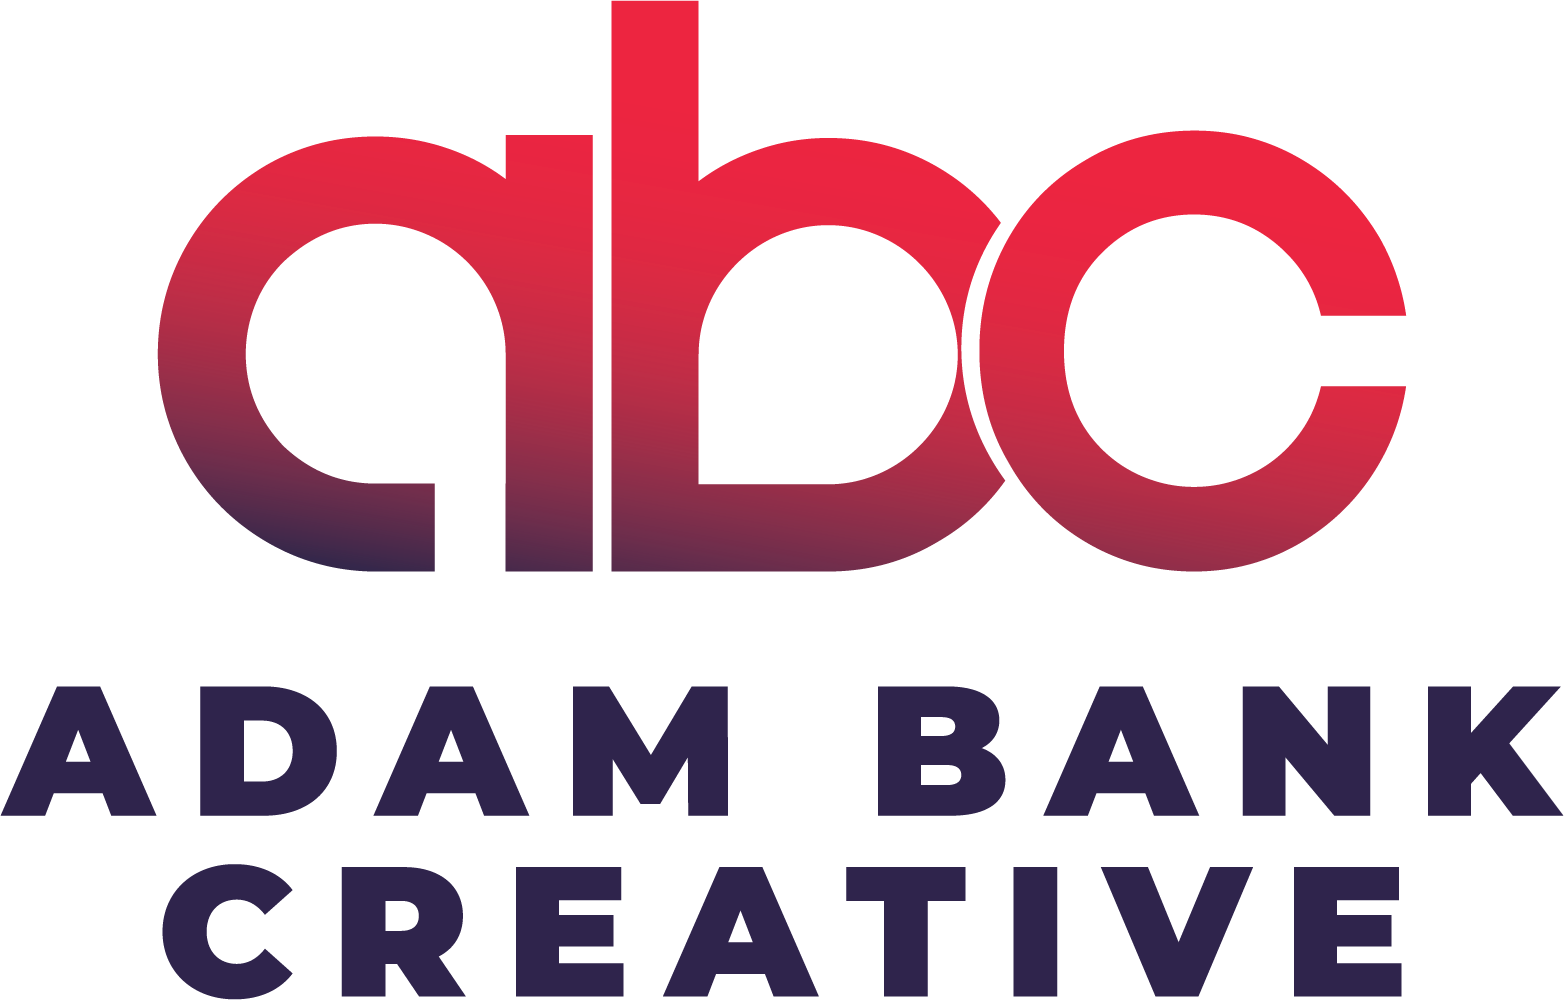 ADAM BANK CREATIVE